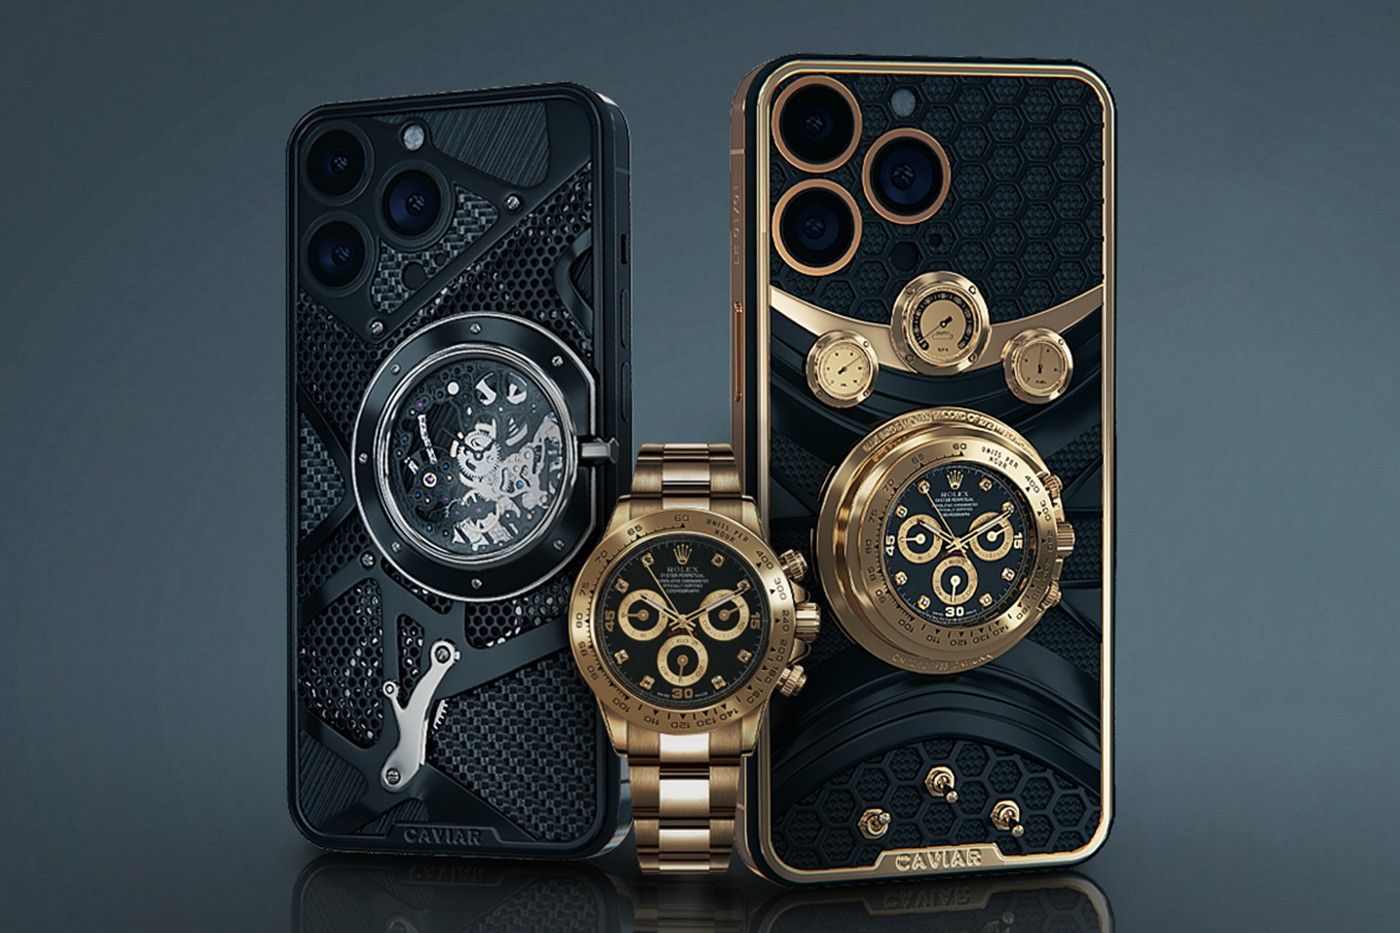 Caviar's iPhone 14 Pro Max houses a Rolex Cosmograph Daytona